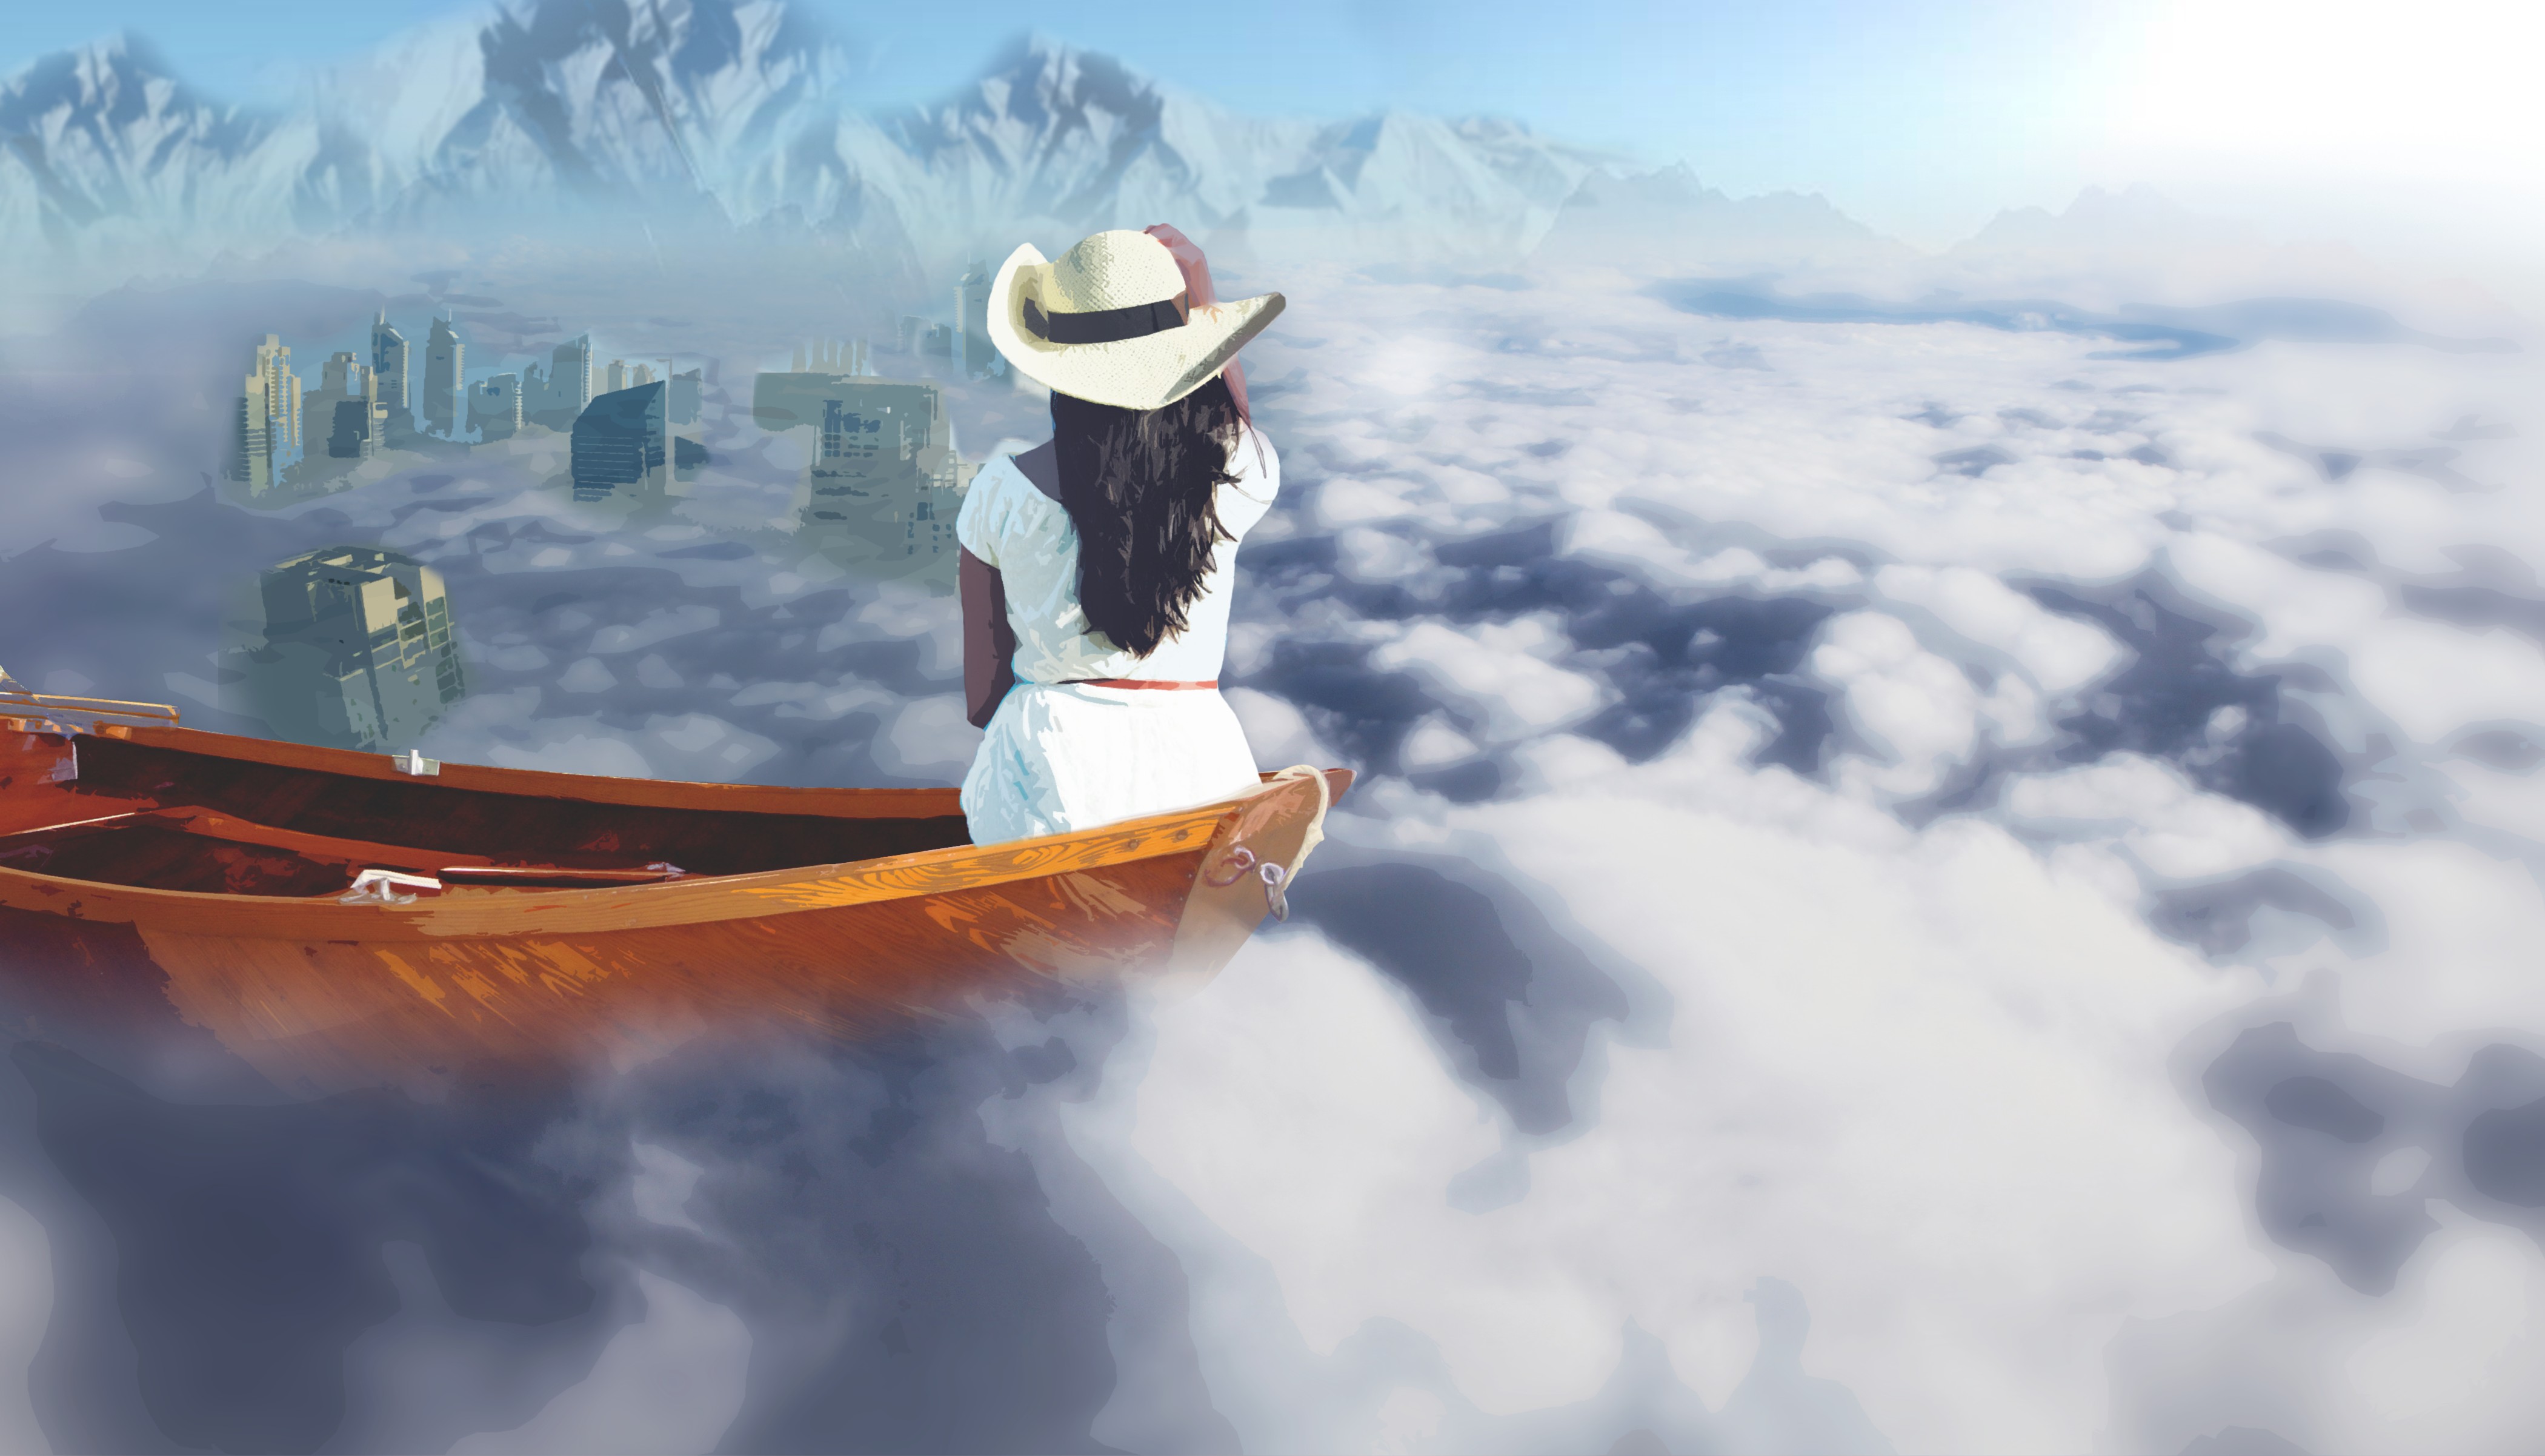 women, Concept art, Digital art, Clouds, Boat, White dress, Mountains, Photoshop Wallpaper